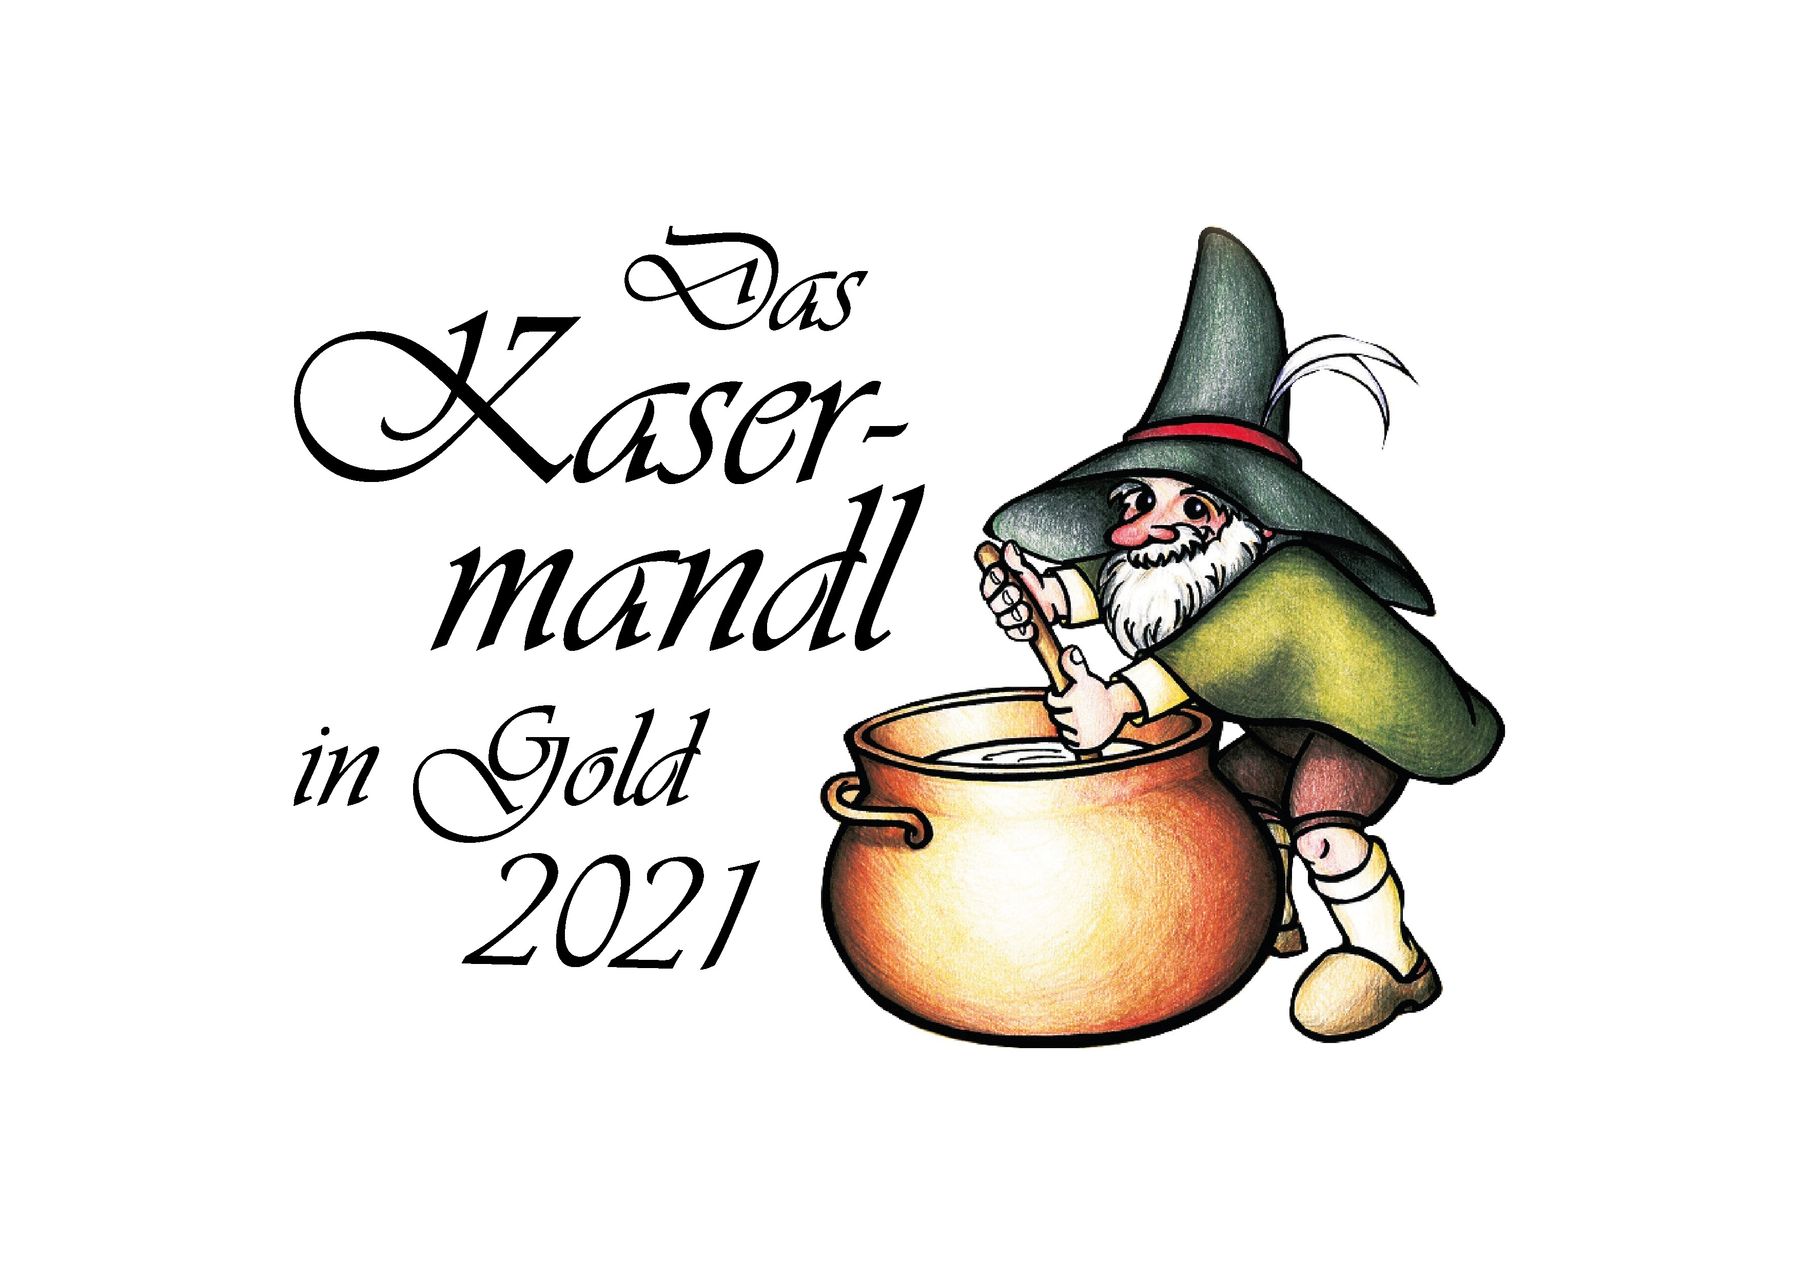 Das Kasermandl in Gold 2021 Logo.jpg